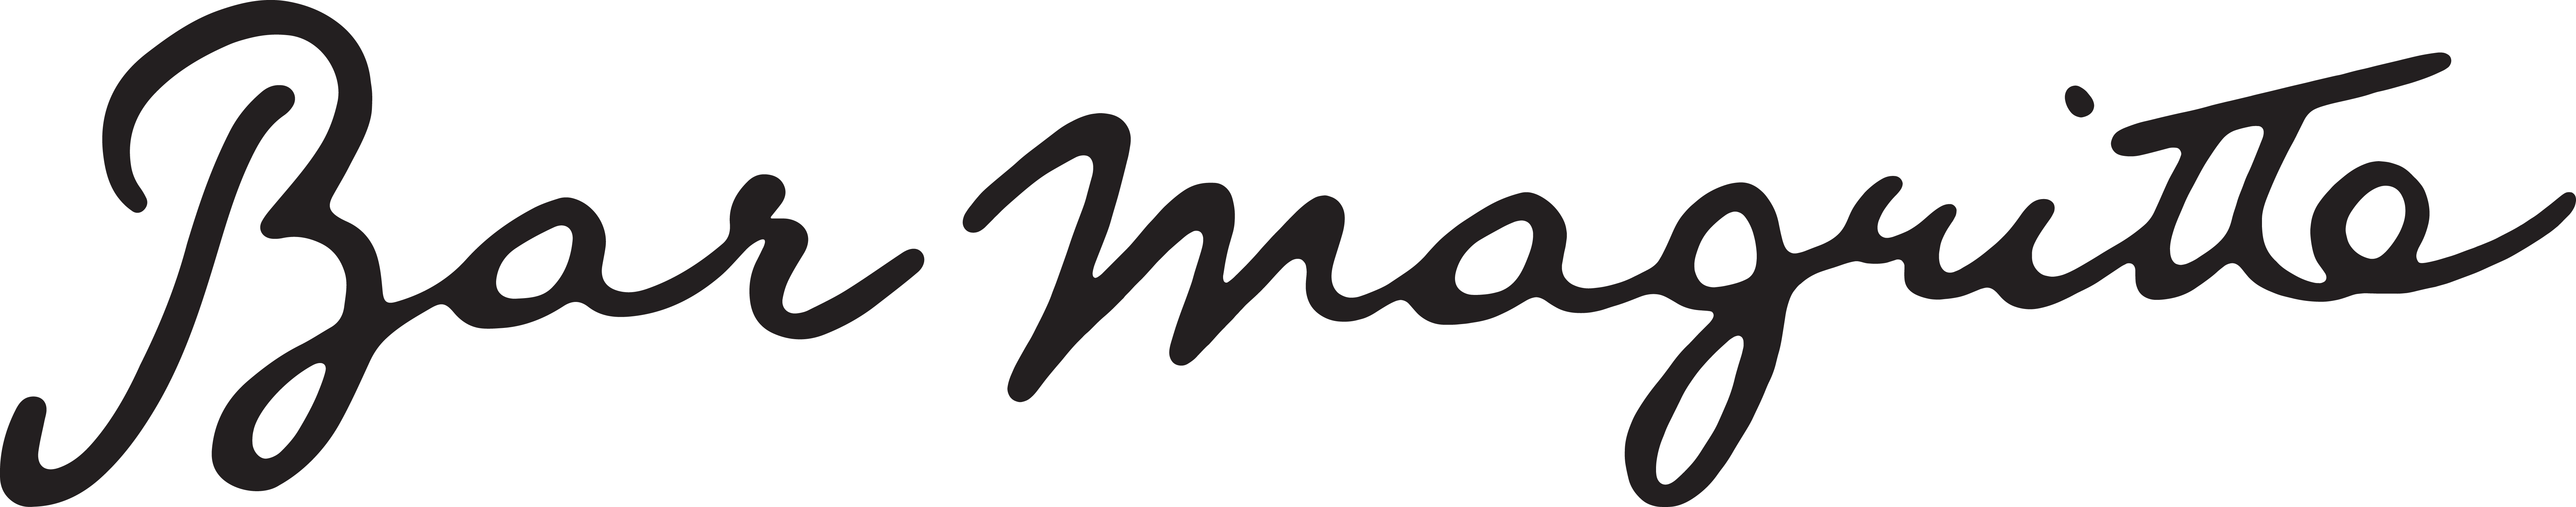 Bar Magritte Logo 